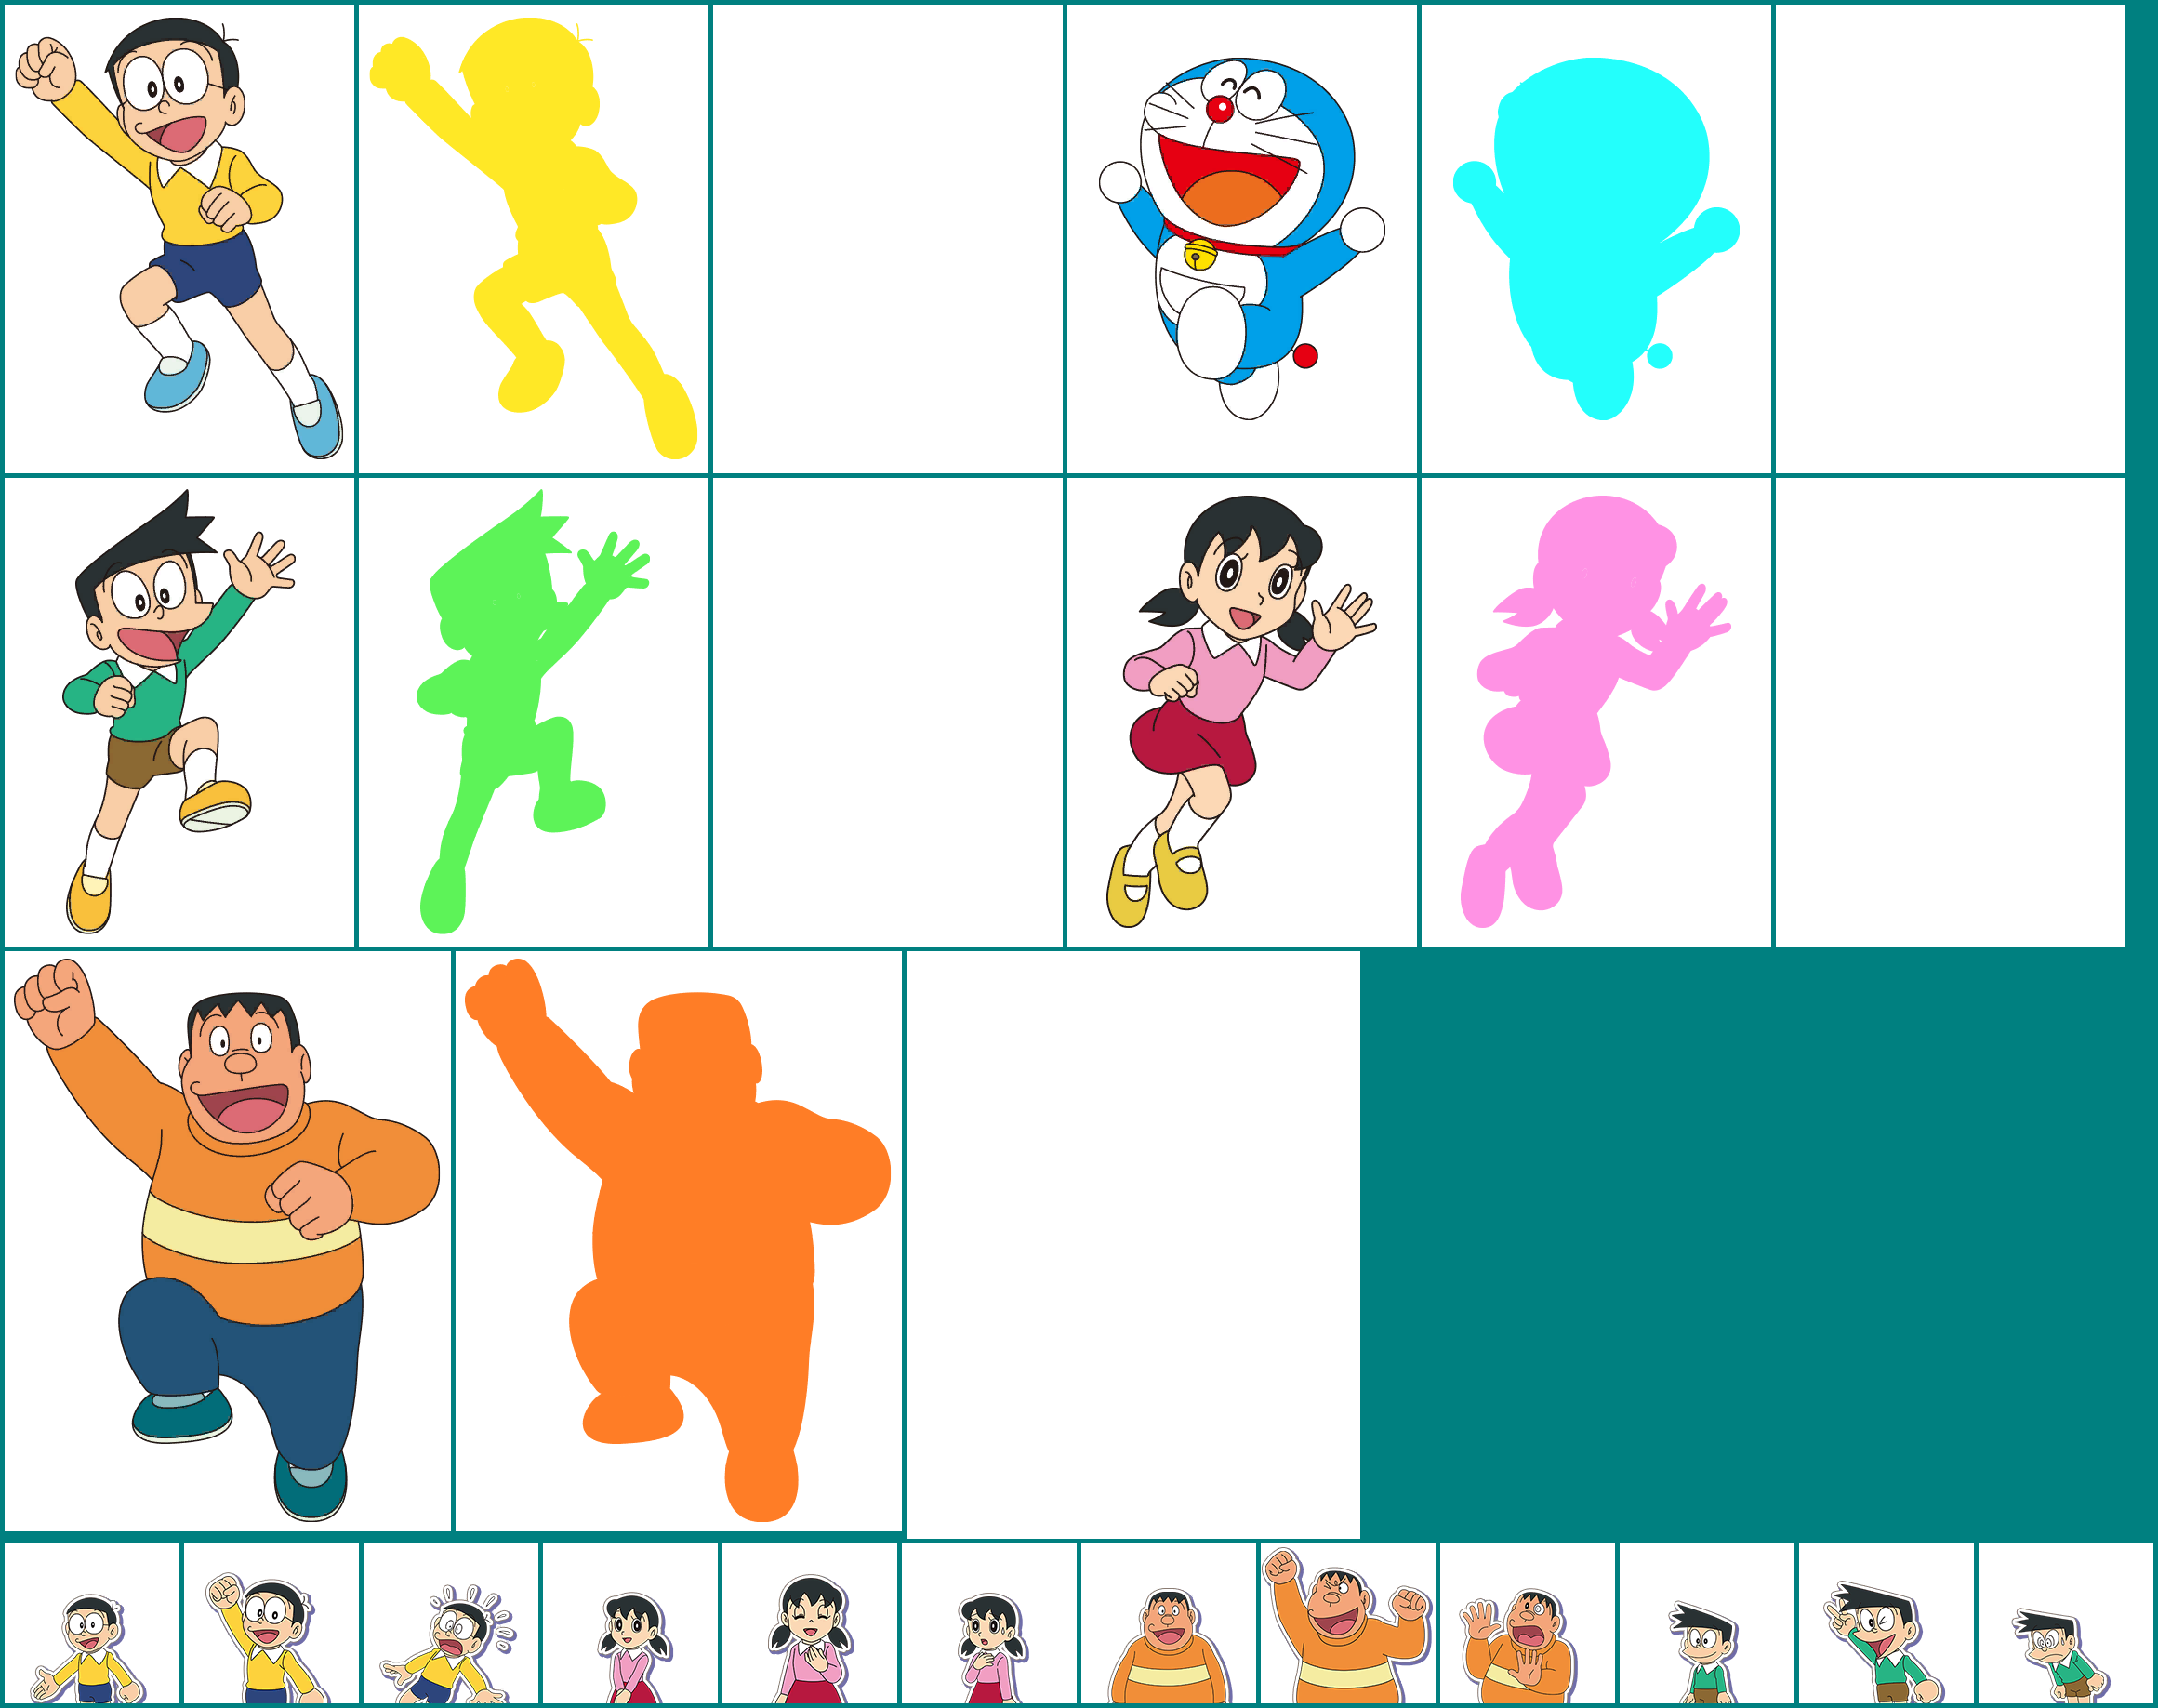 Character Icons & Portraits (Battle)